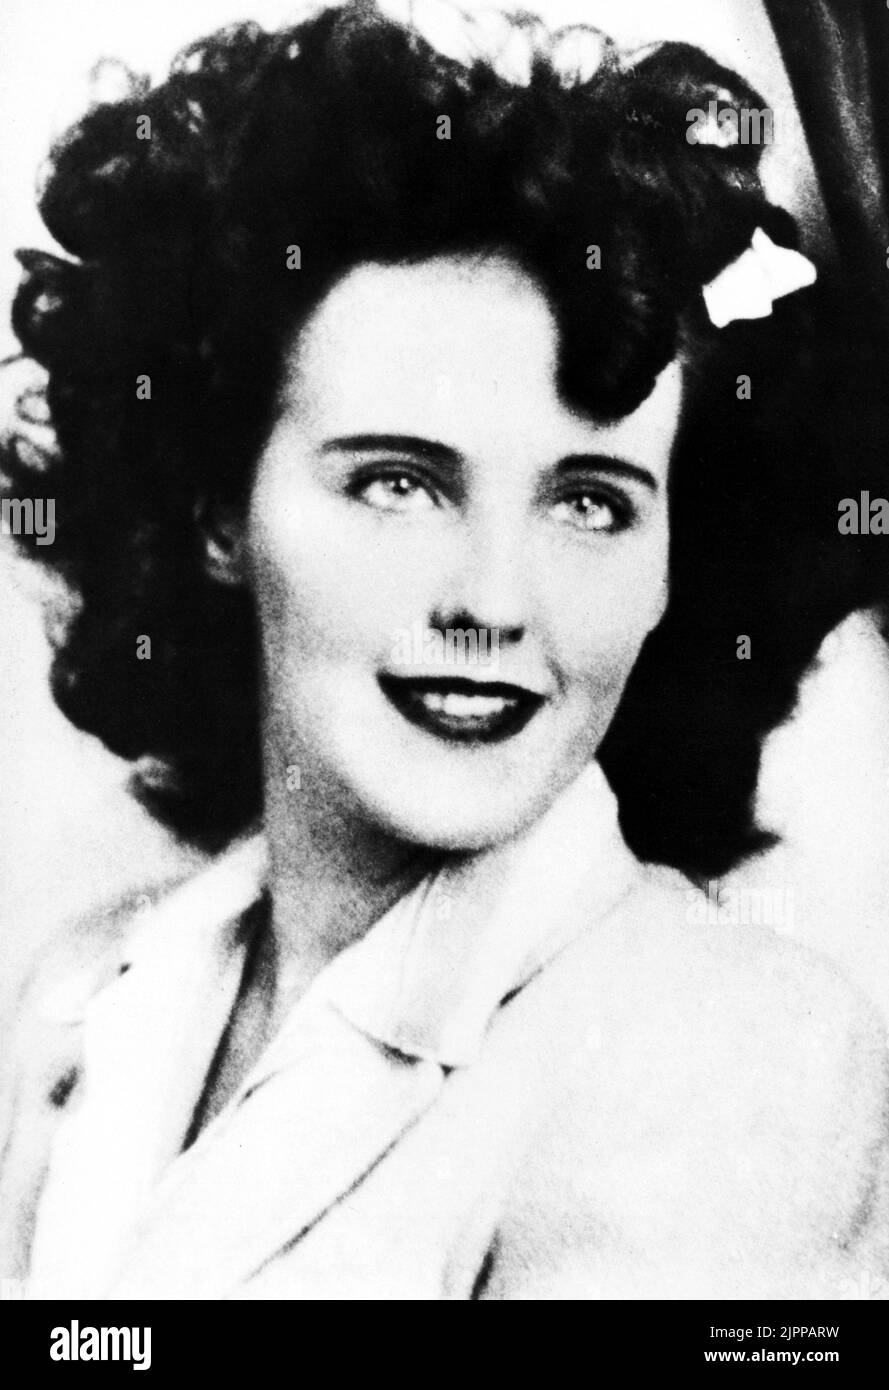 ELIZABETH SHORT alias The Black Dahlia ( 1924 - 1947 ). The january 15th , 1947 Elizabeth body was found in two pieces at a vacant lot in Hollywood . The murder is still unsolved - CINEMA - MYSTERY - MISTERO - delitto insoluto - omicidio - CRONACA NERA - smile - sorriso - cult macabro  ----  Archivio GBB Stock Photo